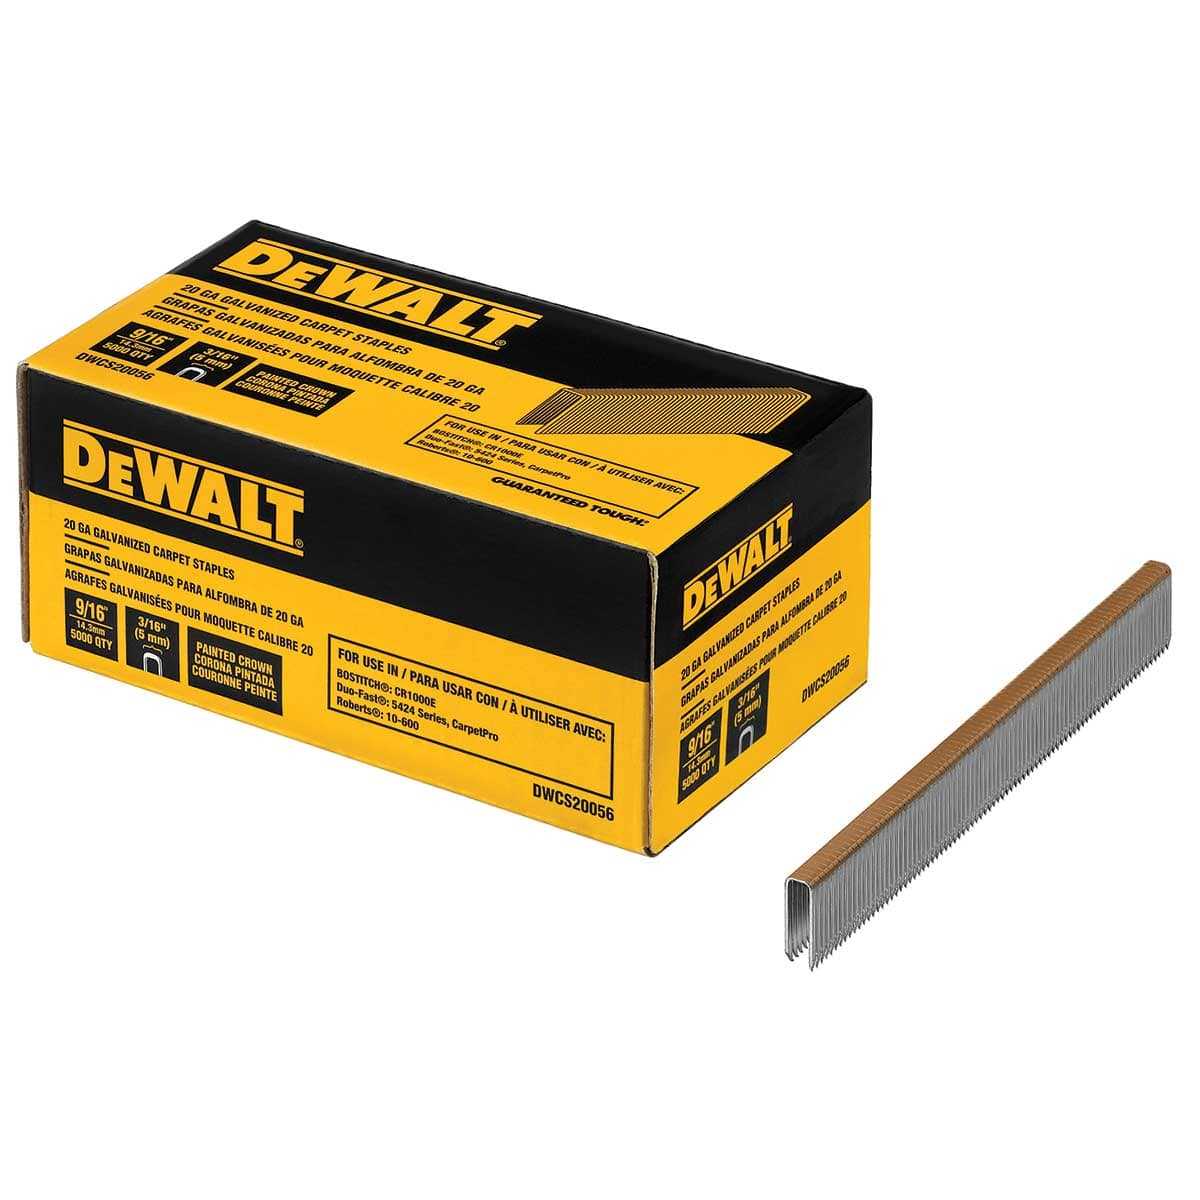 Dewalt, DEWALT 20-Gauge 9/16 in. L Galvanized Carpet Staples